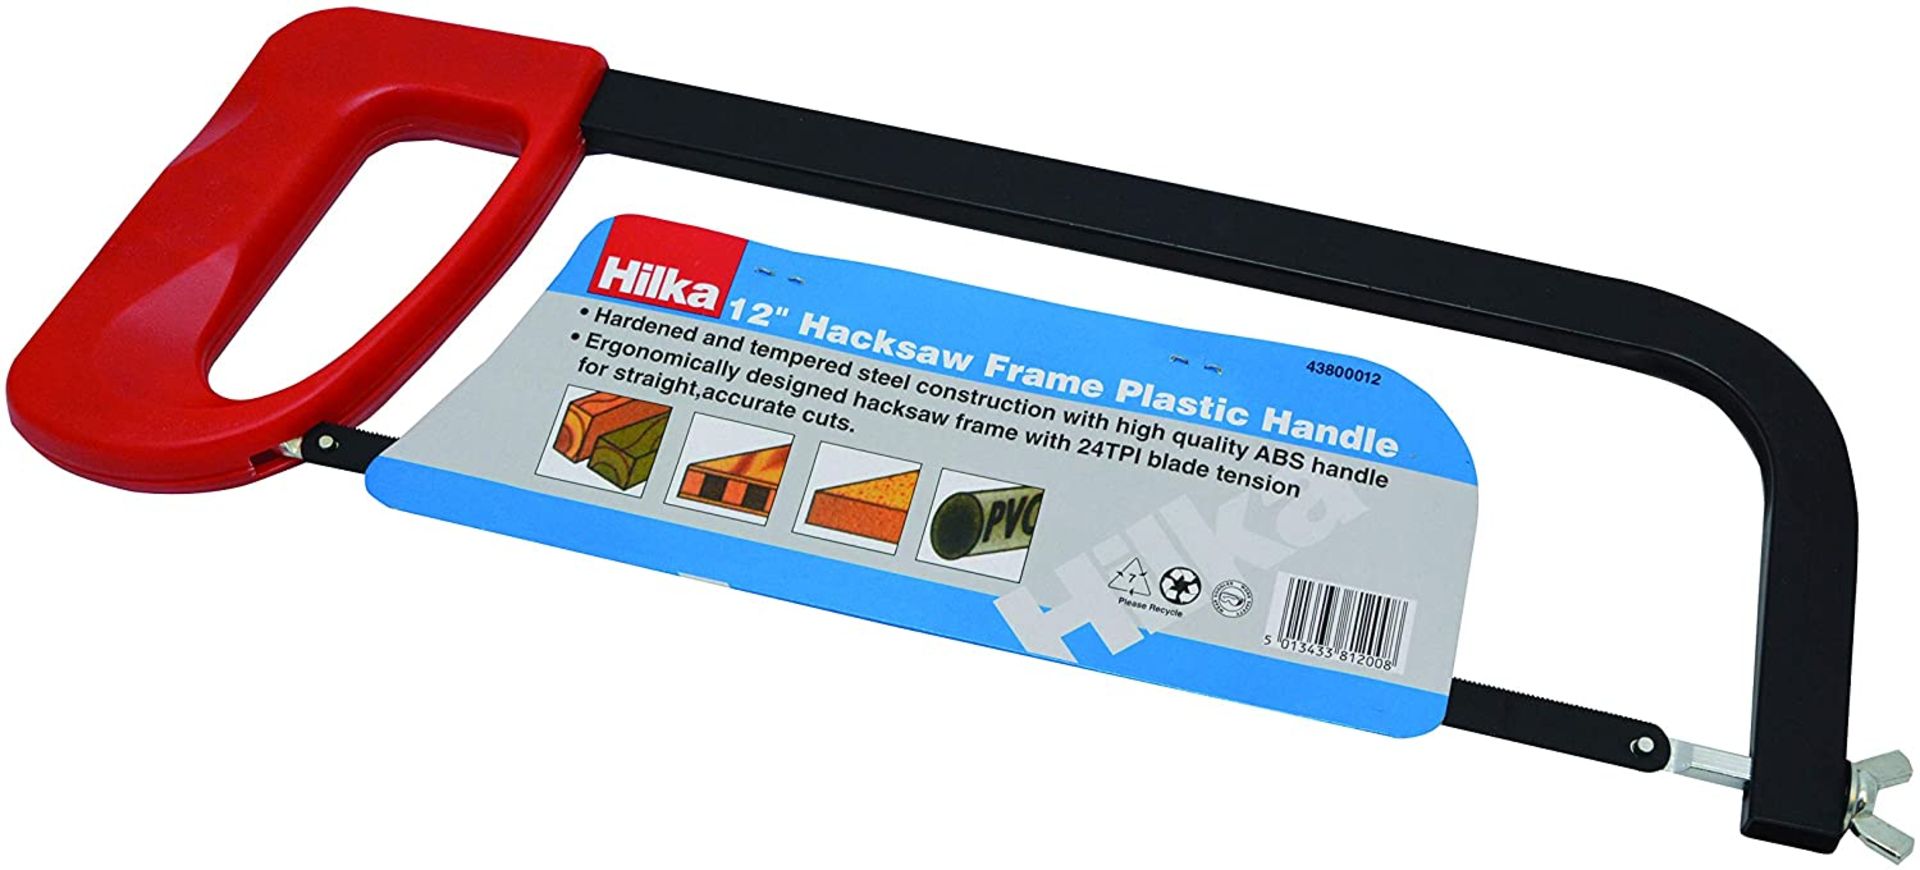 New Hilka 12" Hacksaw With Plastic Handle